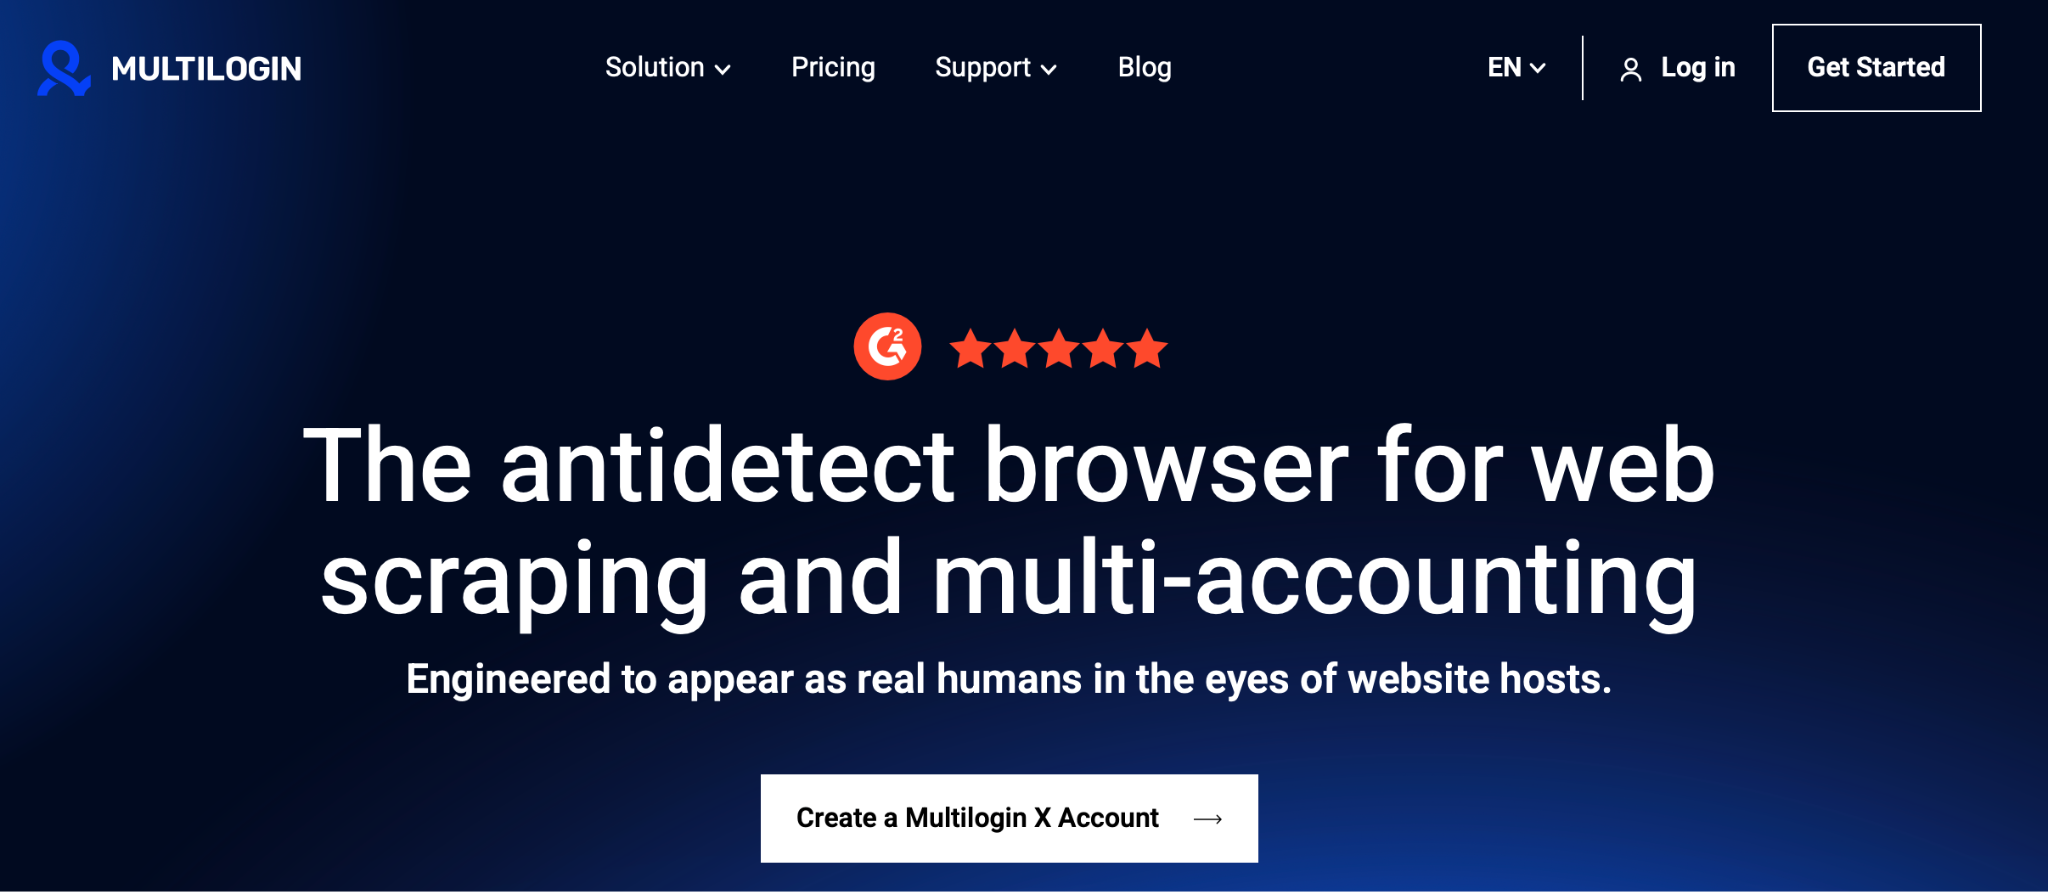 Antidetect Browser Multilogin